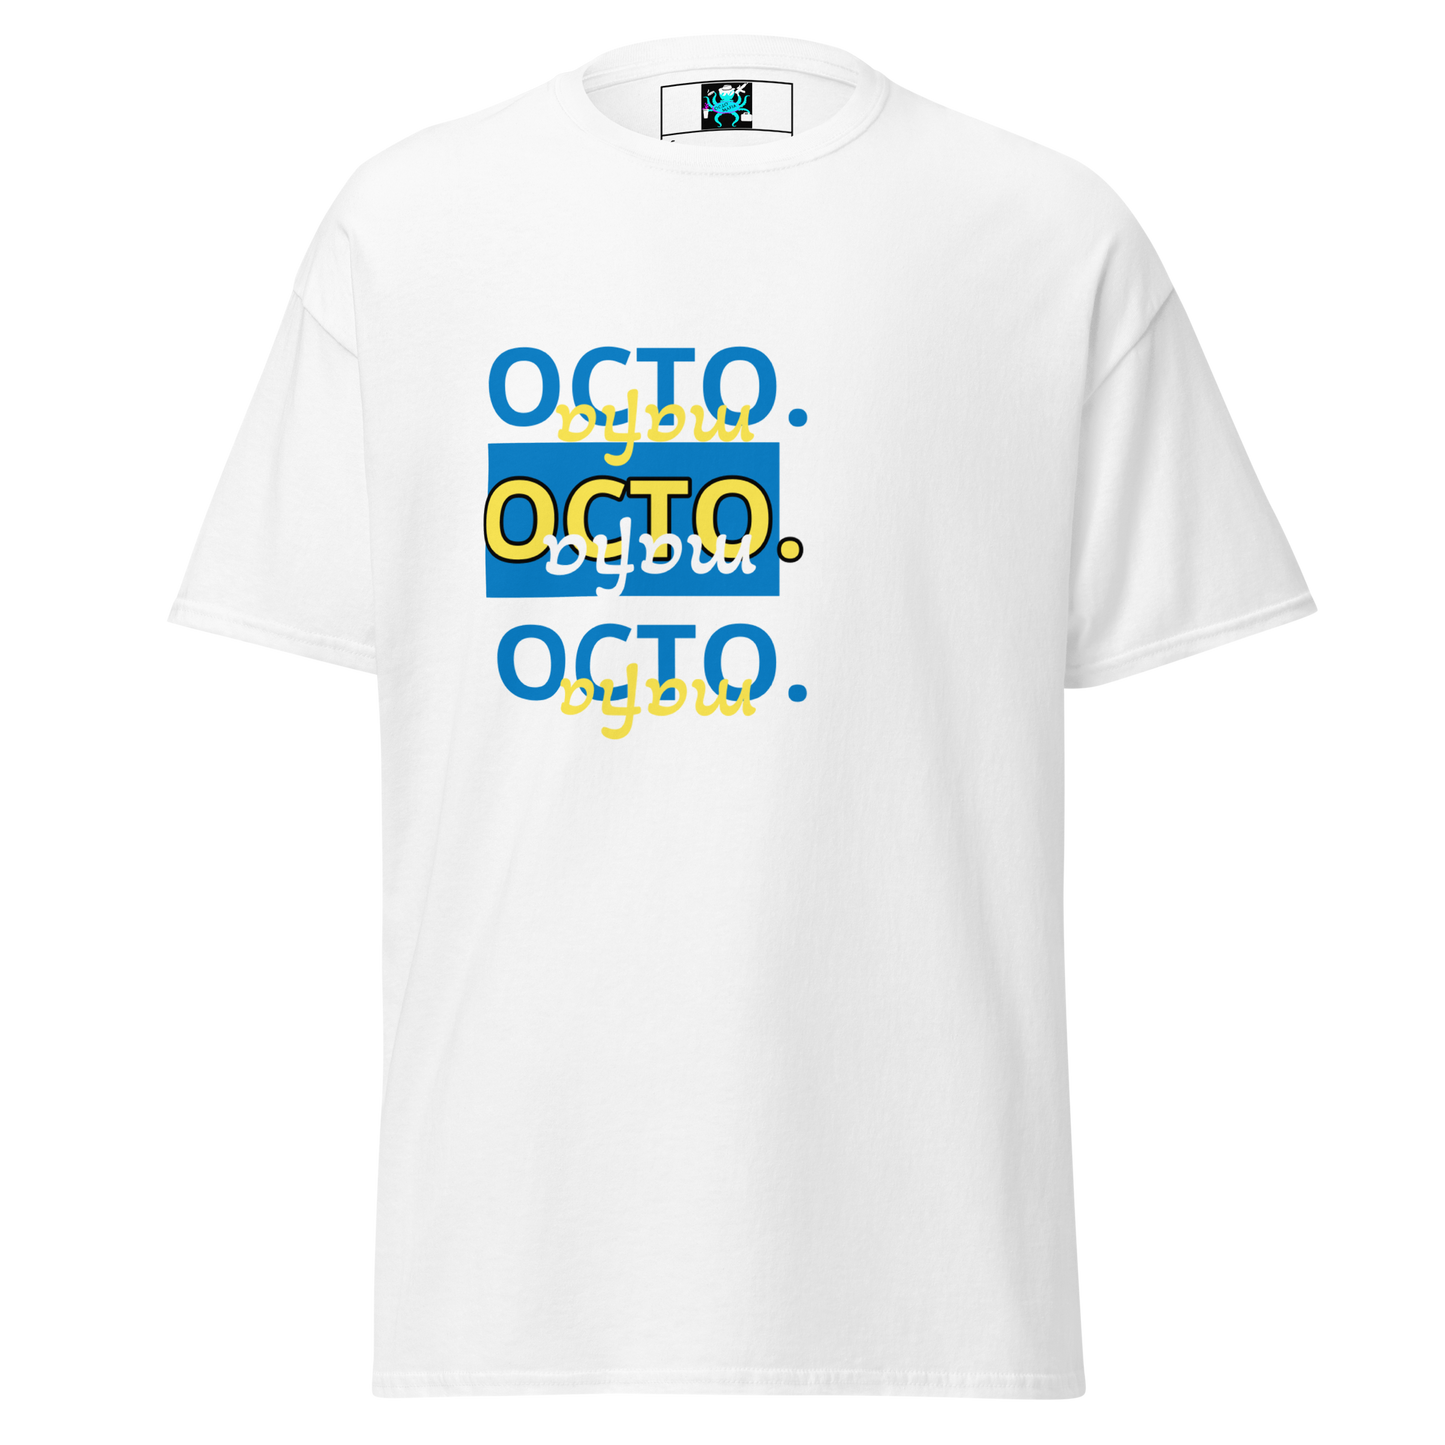 Octo. Mafia "triple double" T-shirt